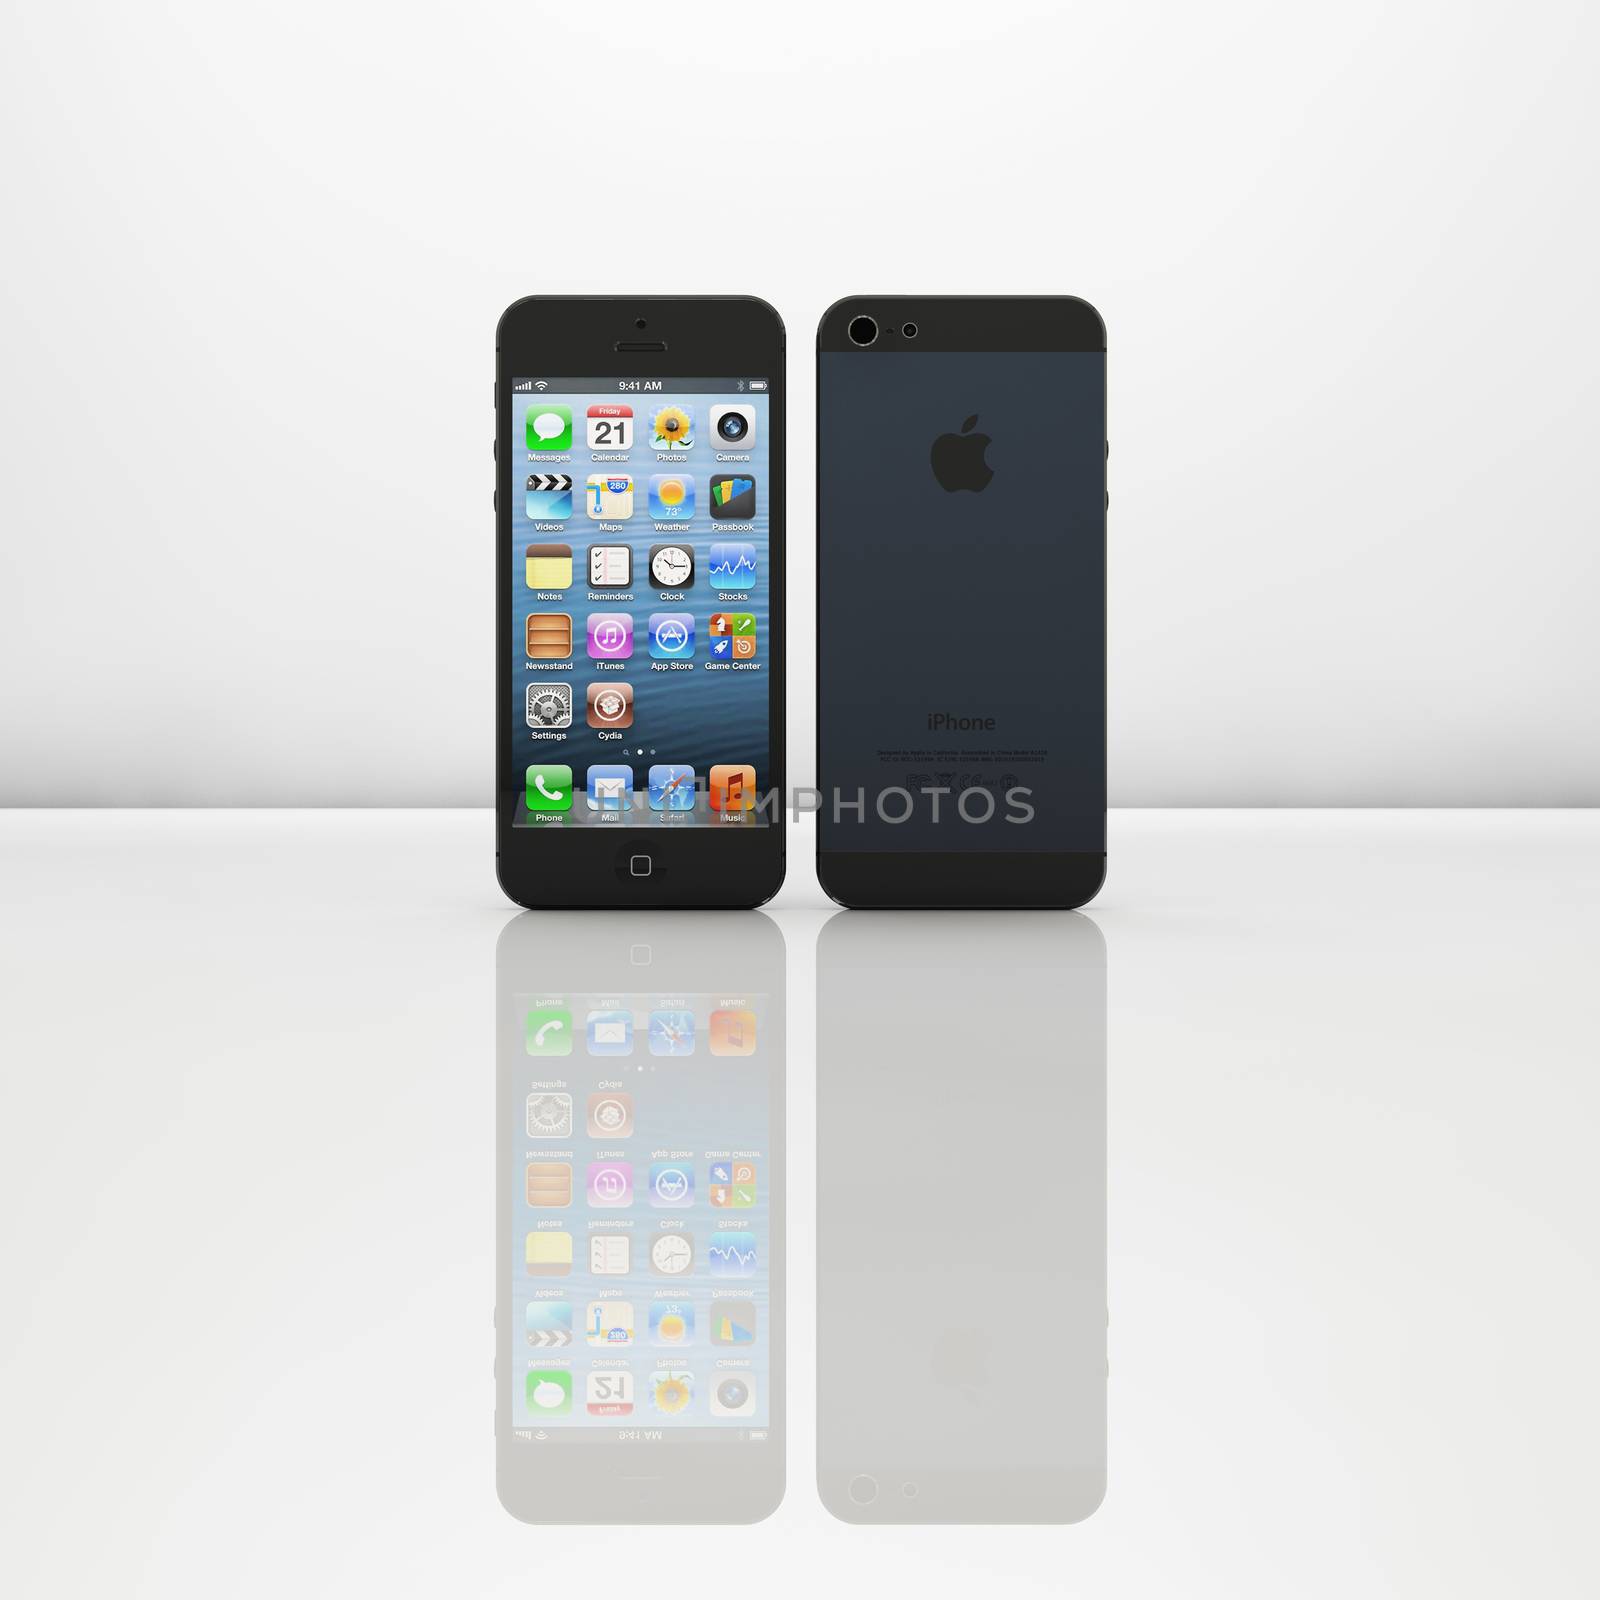 Iphone 5 on white background